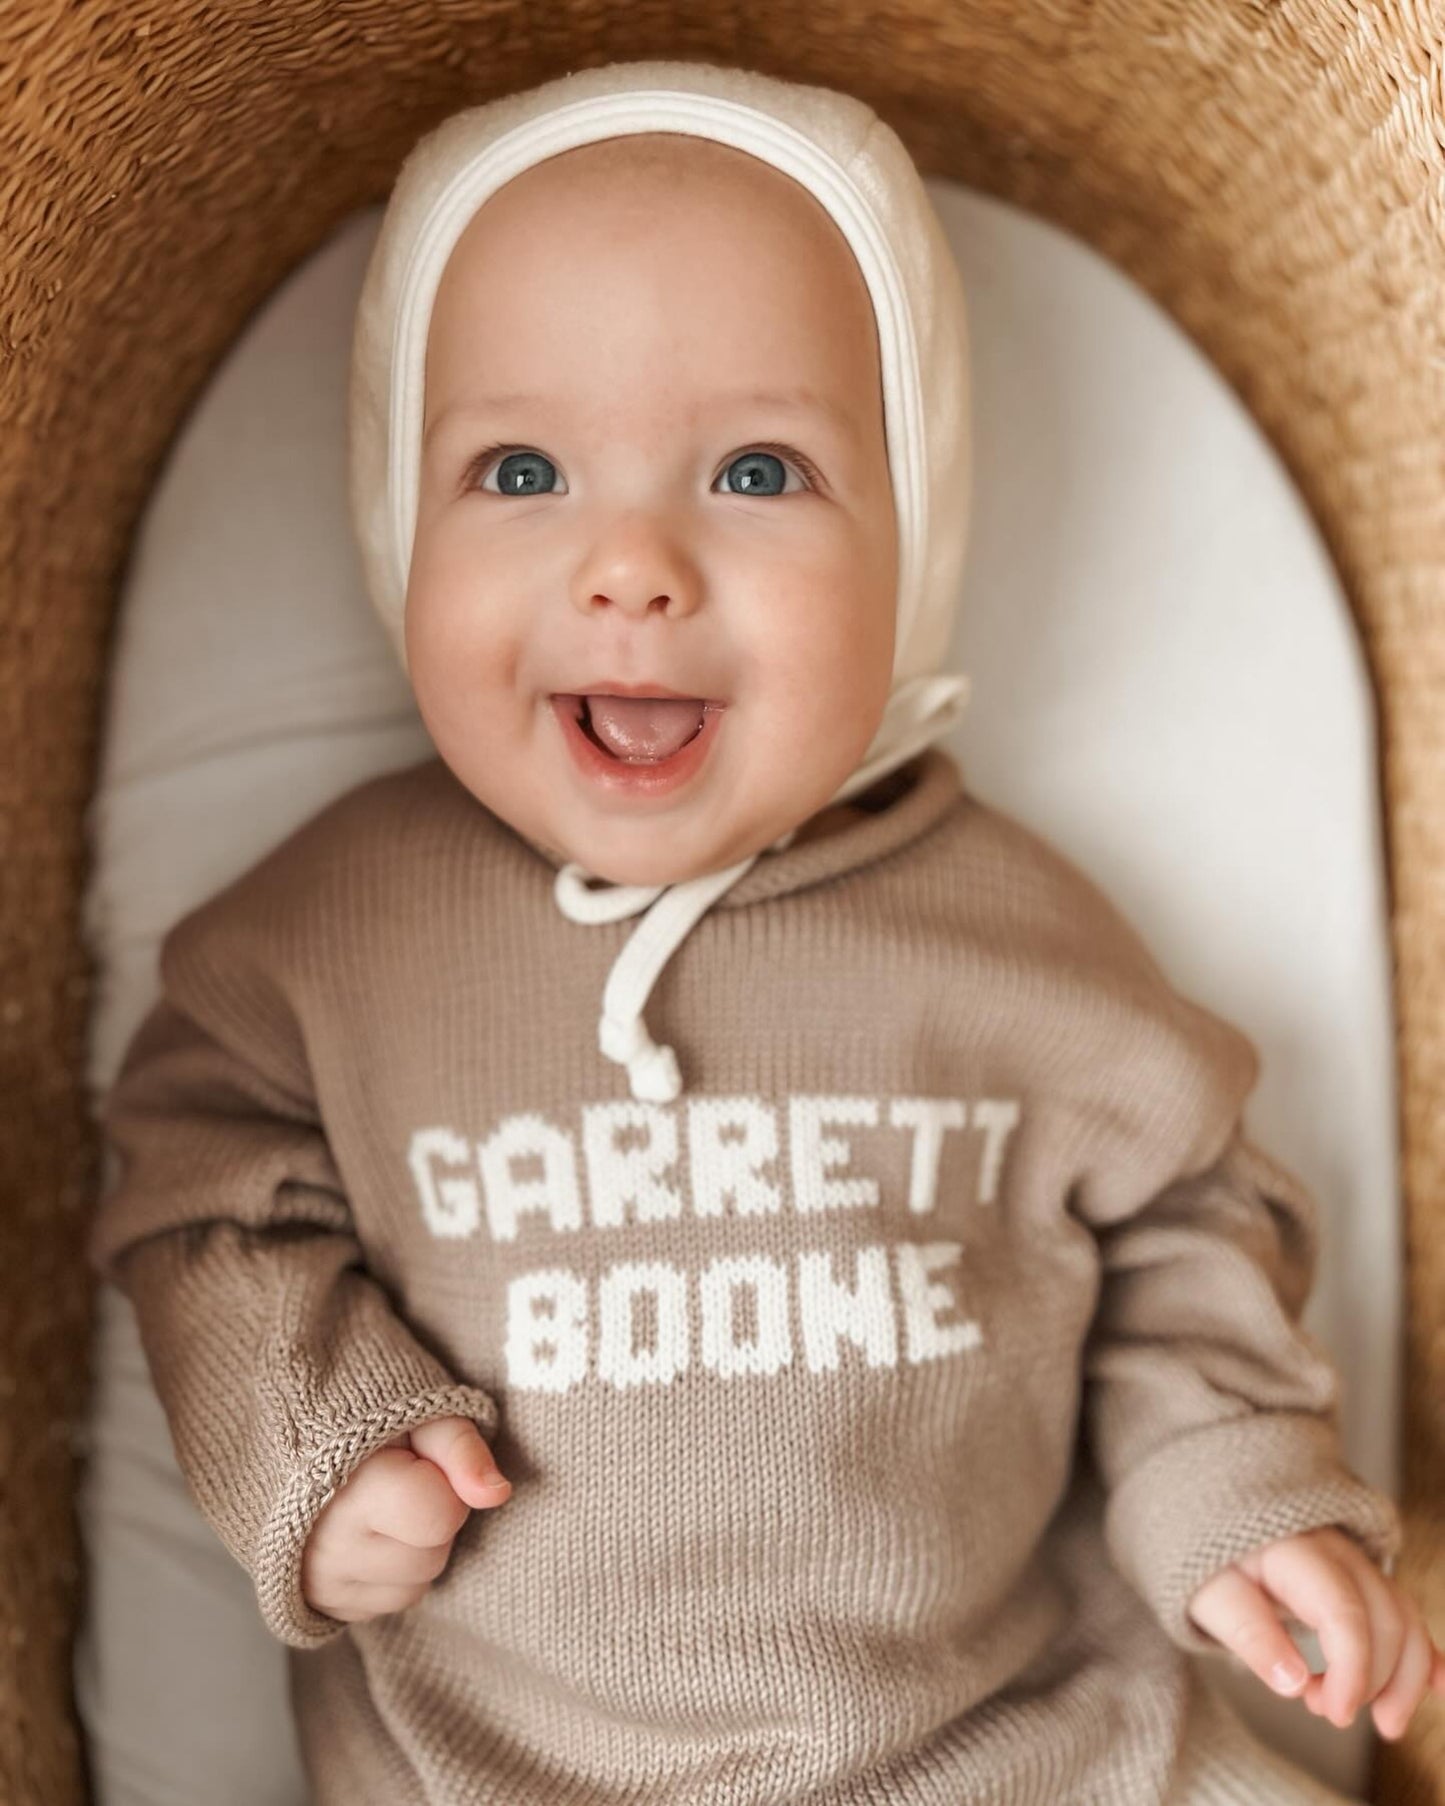 baby boy name sweater